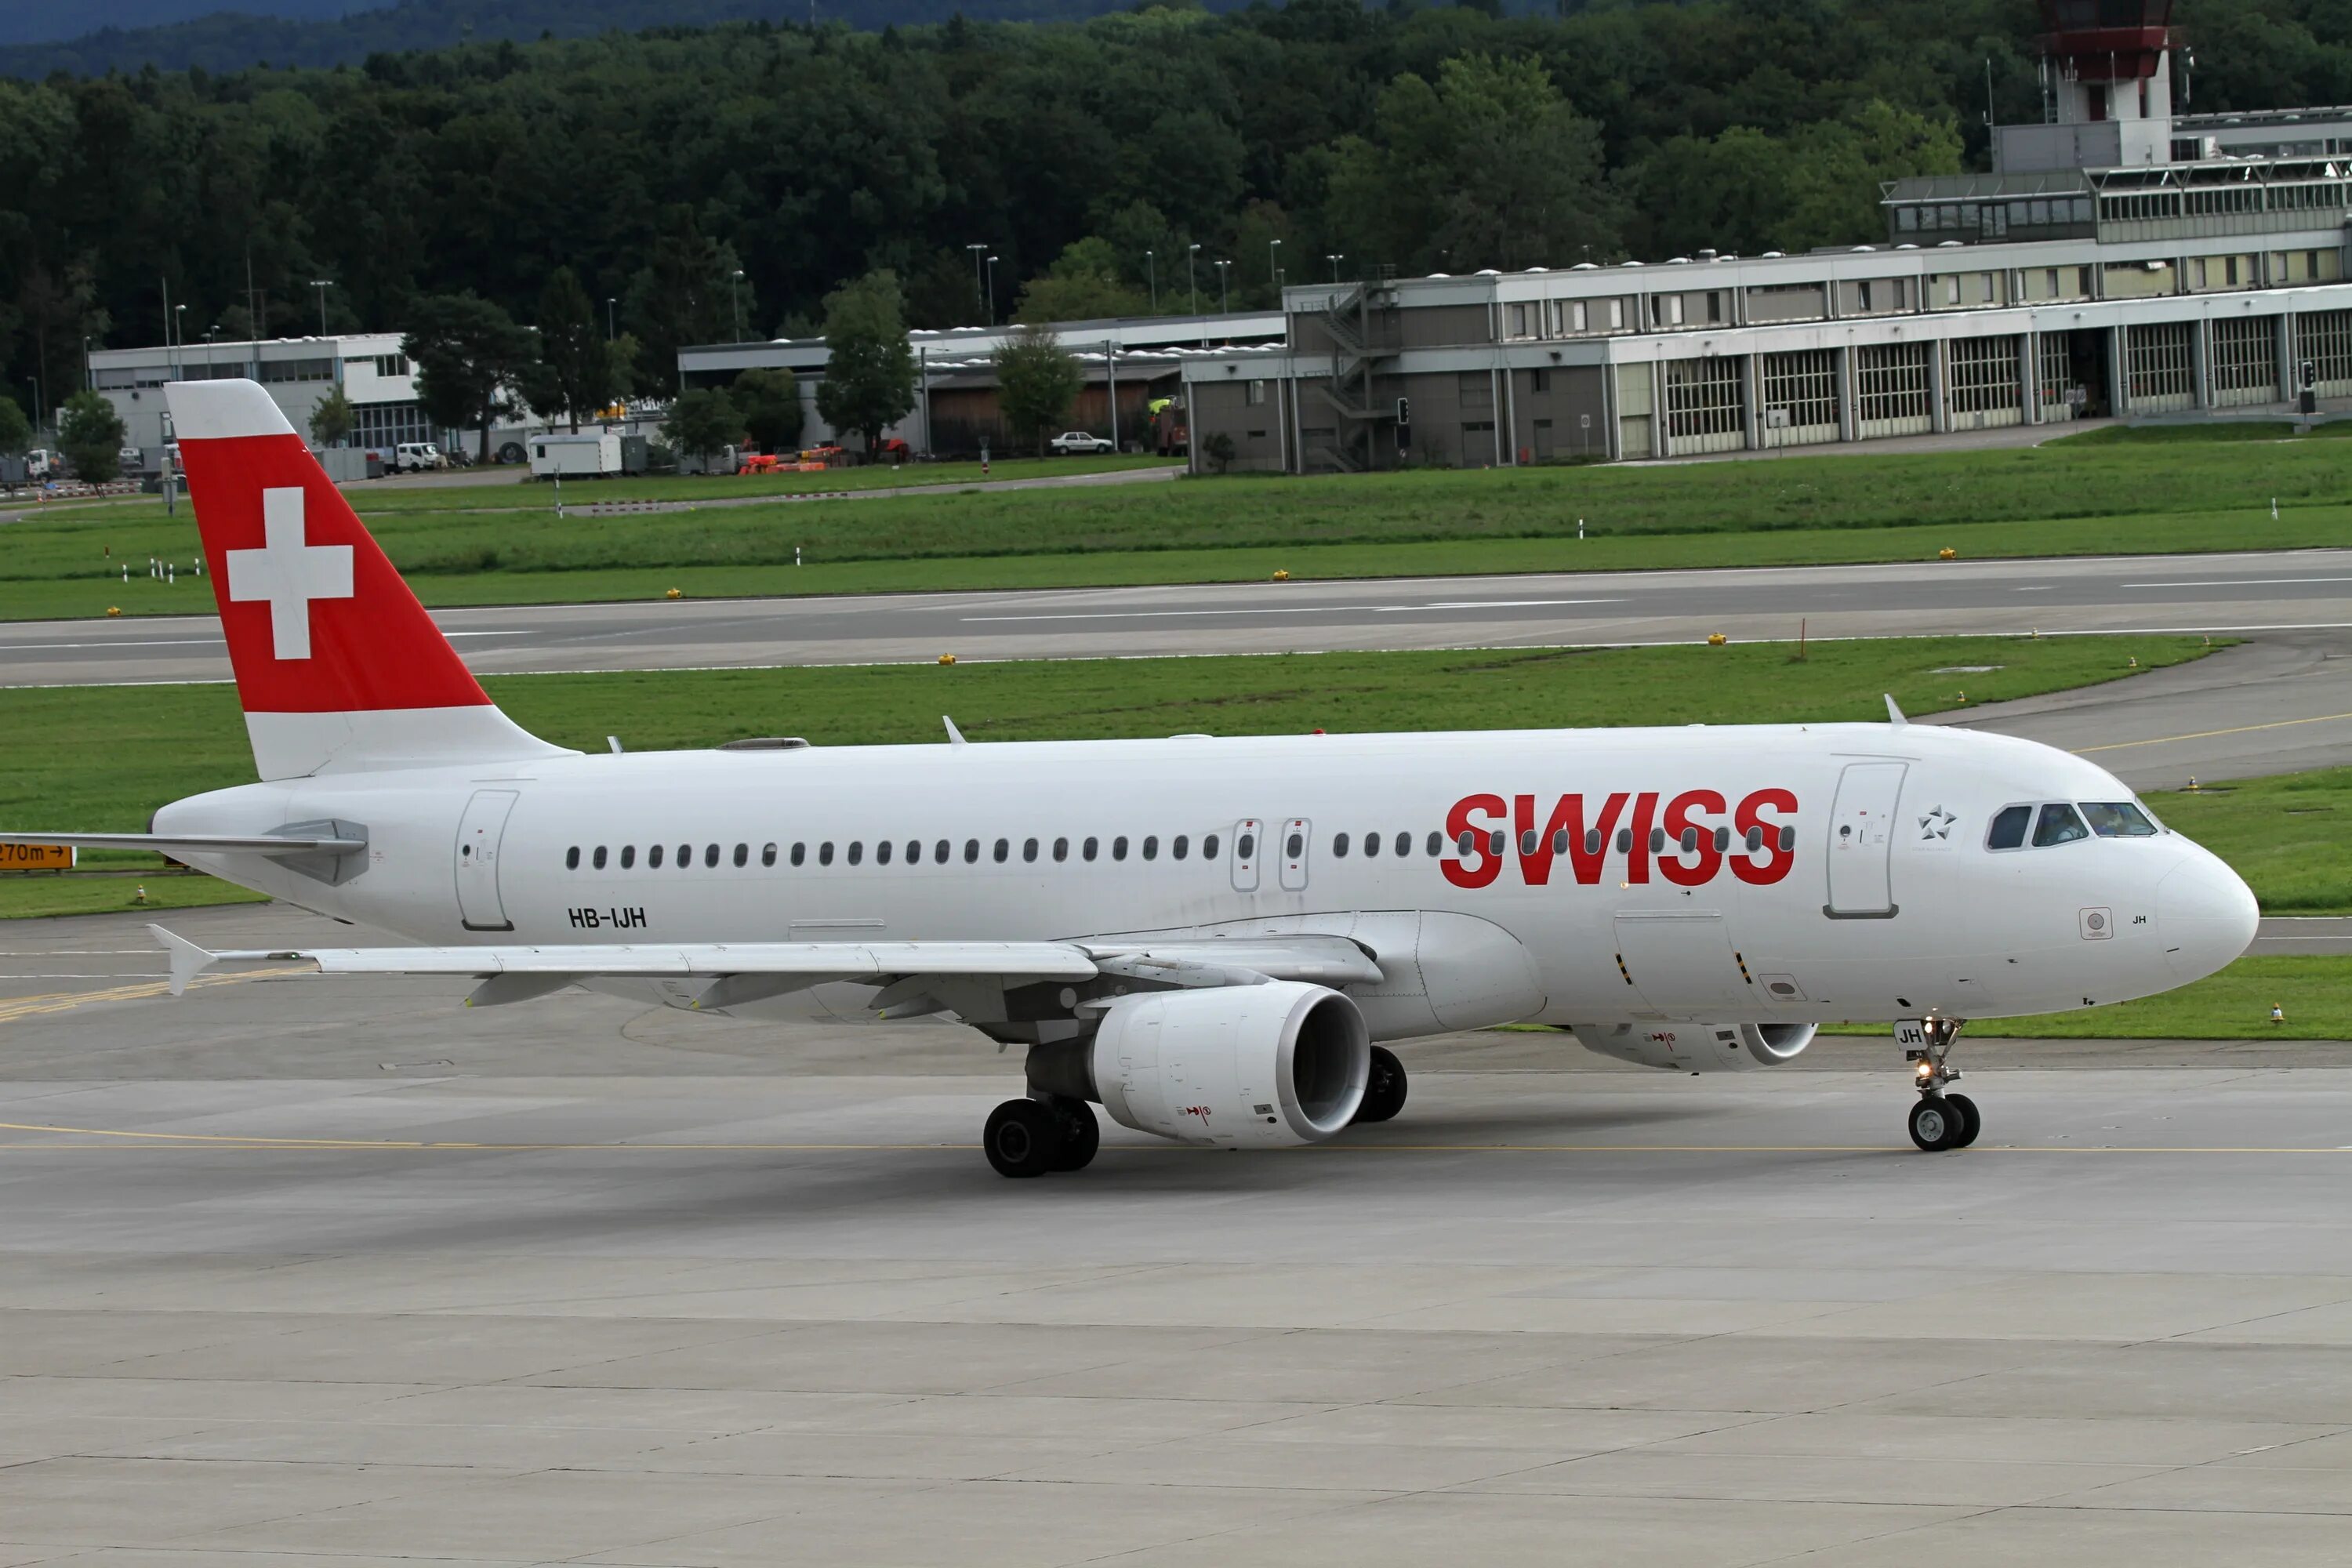 Авиакомпания Швейцарии Swissair. Swiss International Air lines авиакомпании. Парк самолетов Swiss Air. Швейцарские авиалинии самолёты.